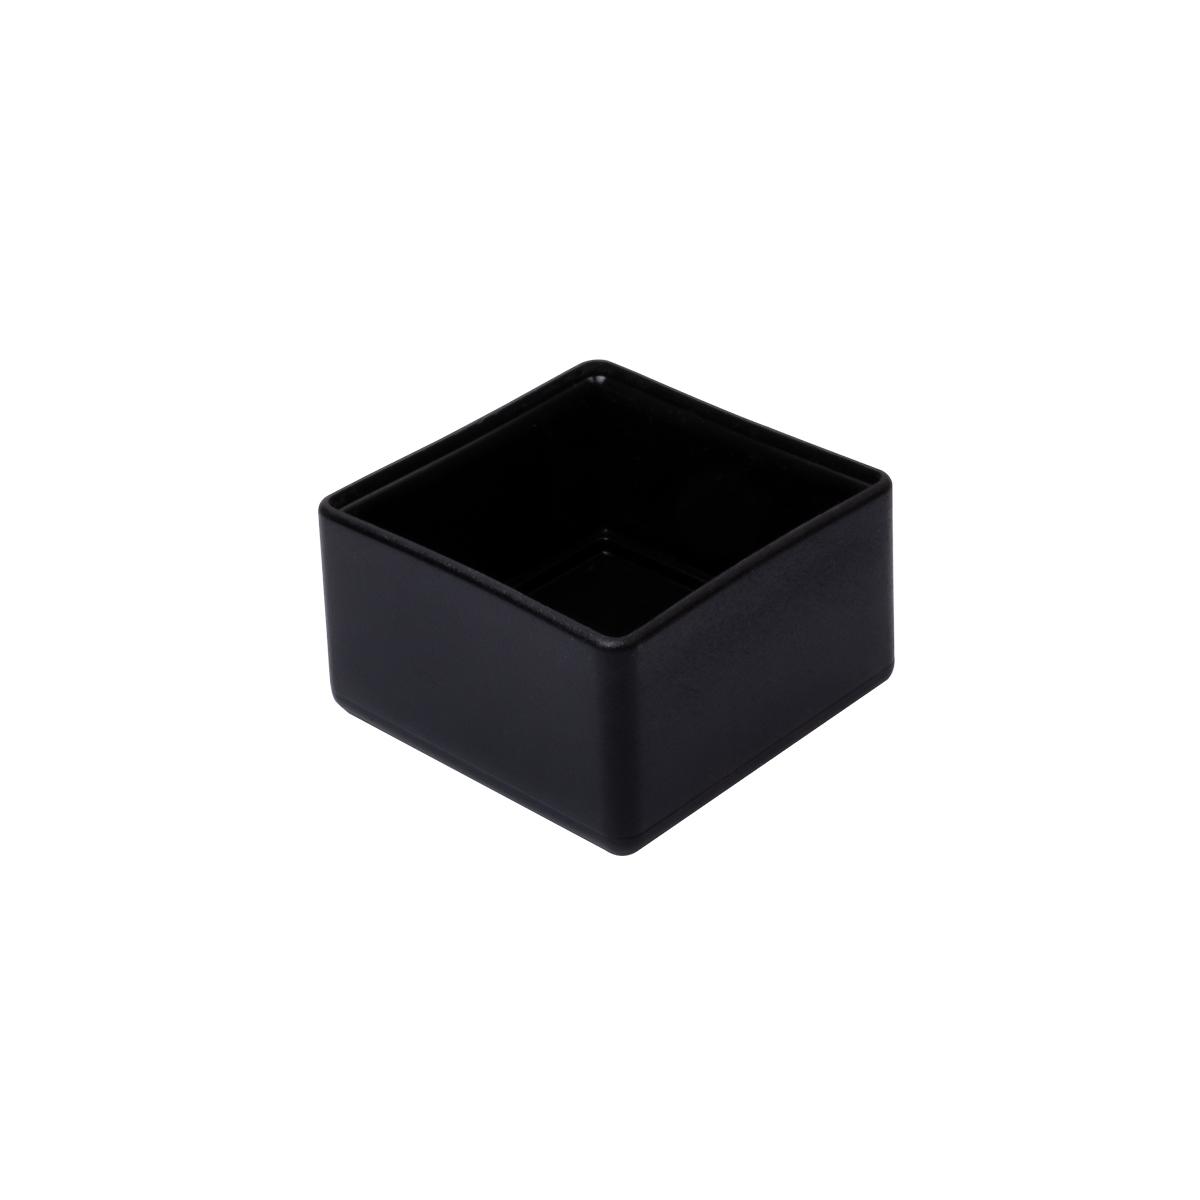 Rechteckkappen 40x40x28mm, schwarz PE (Polyethylen) - MwSt: 19% für Geschäftskunden